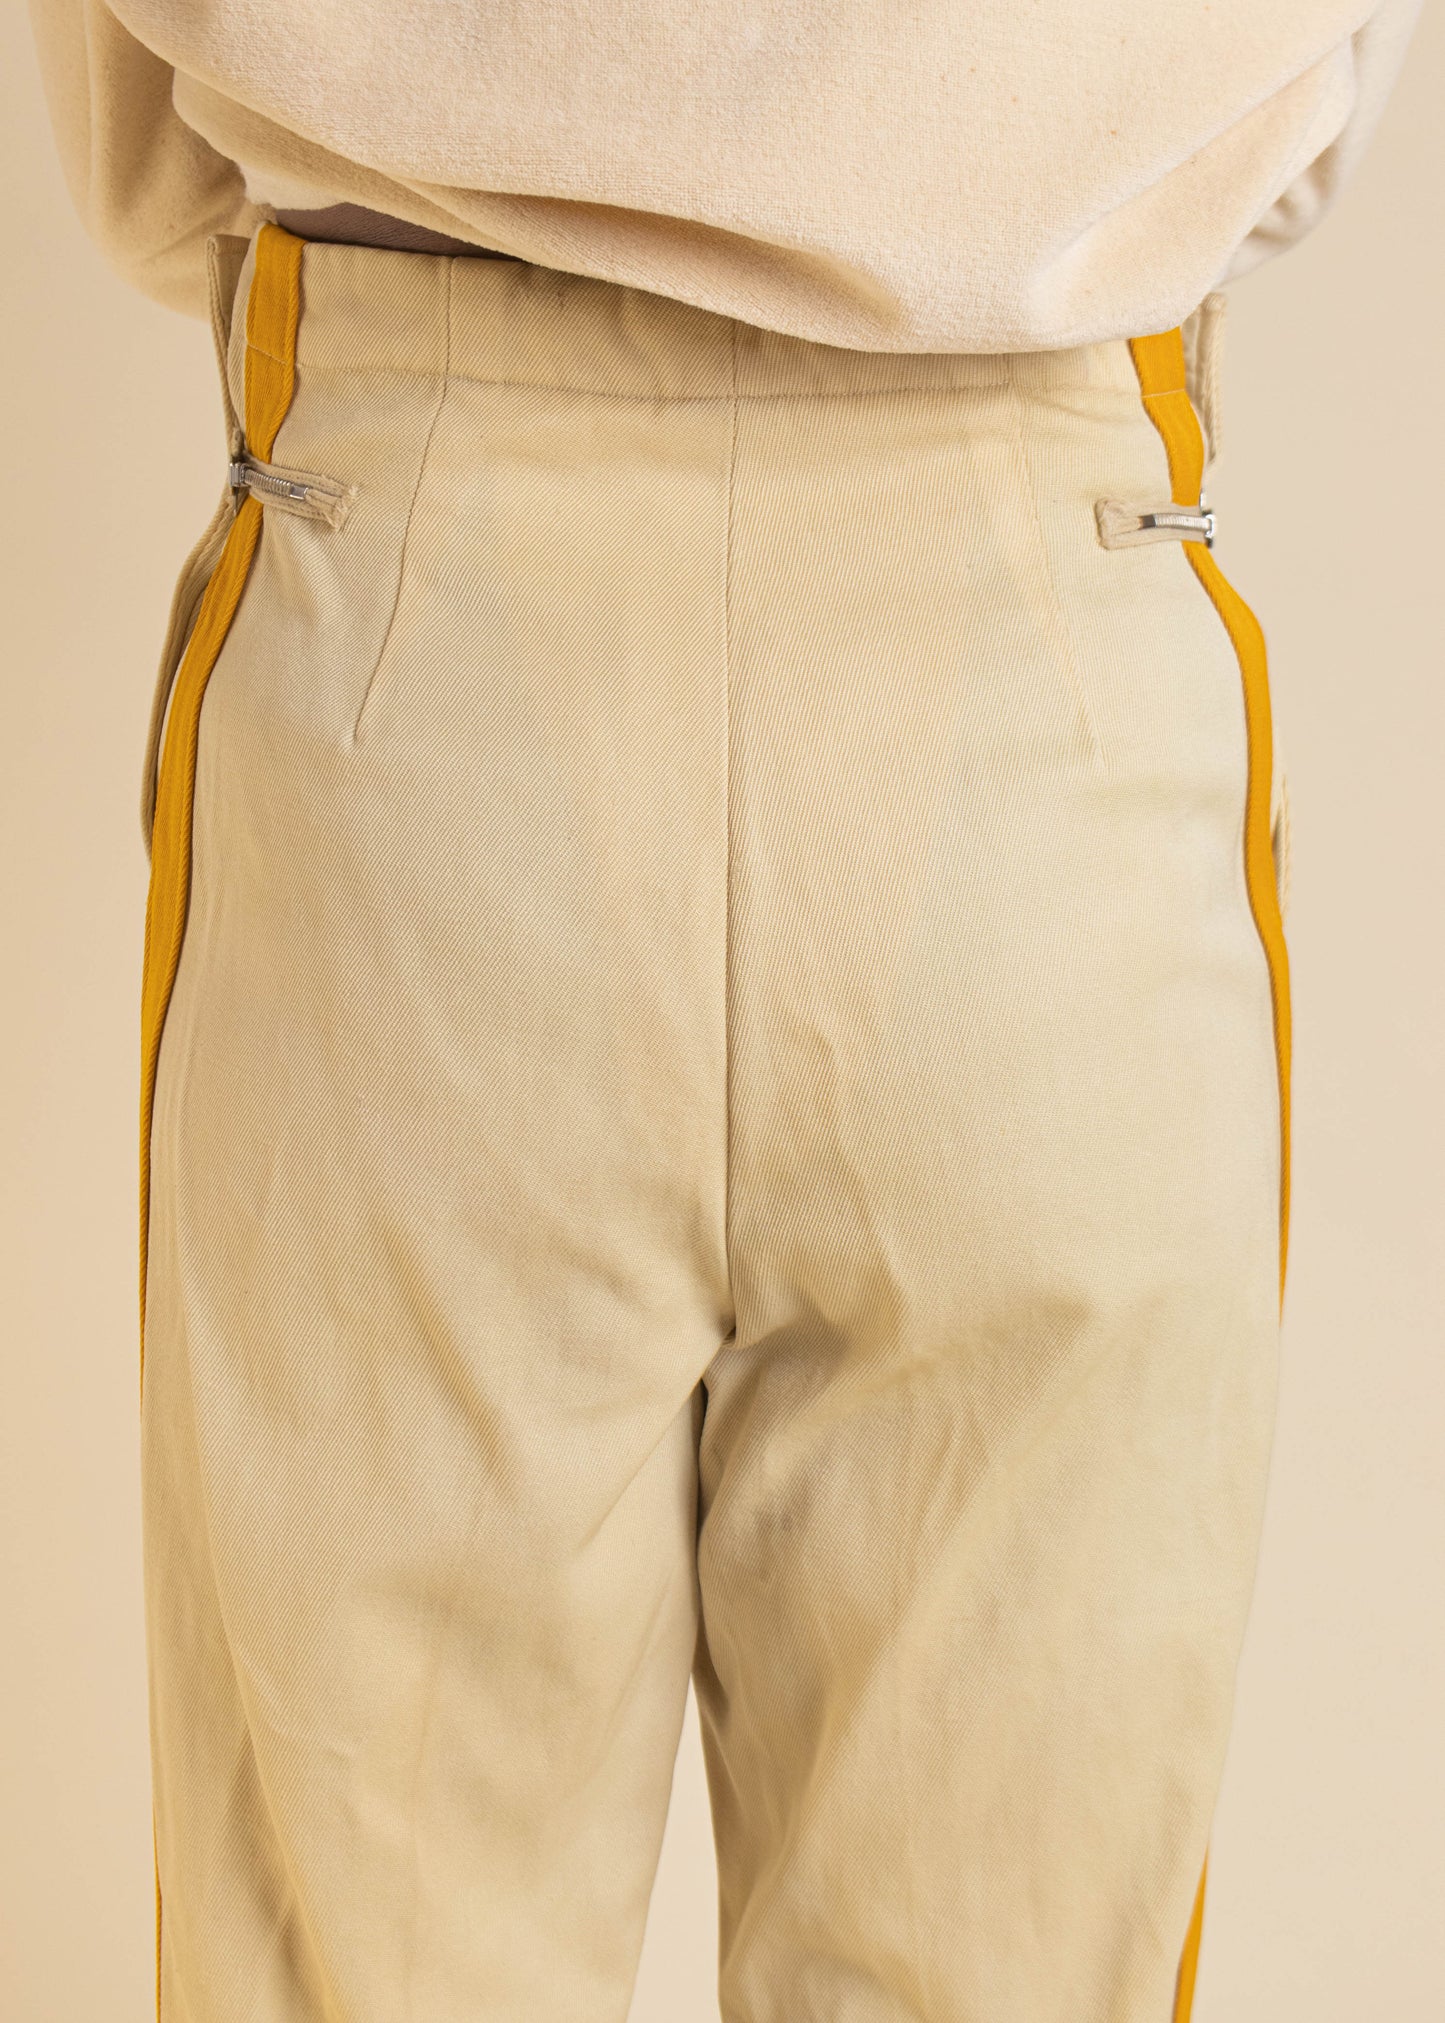 1950s Fechheimer Uniform Trouser Pants Women's 28 Men's 31